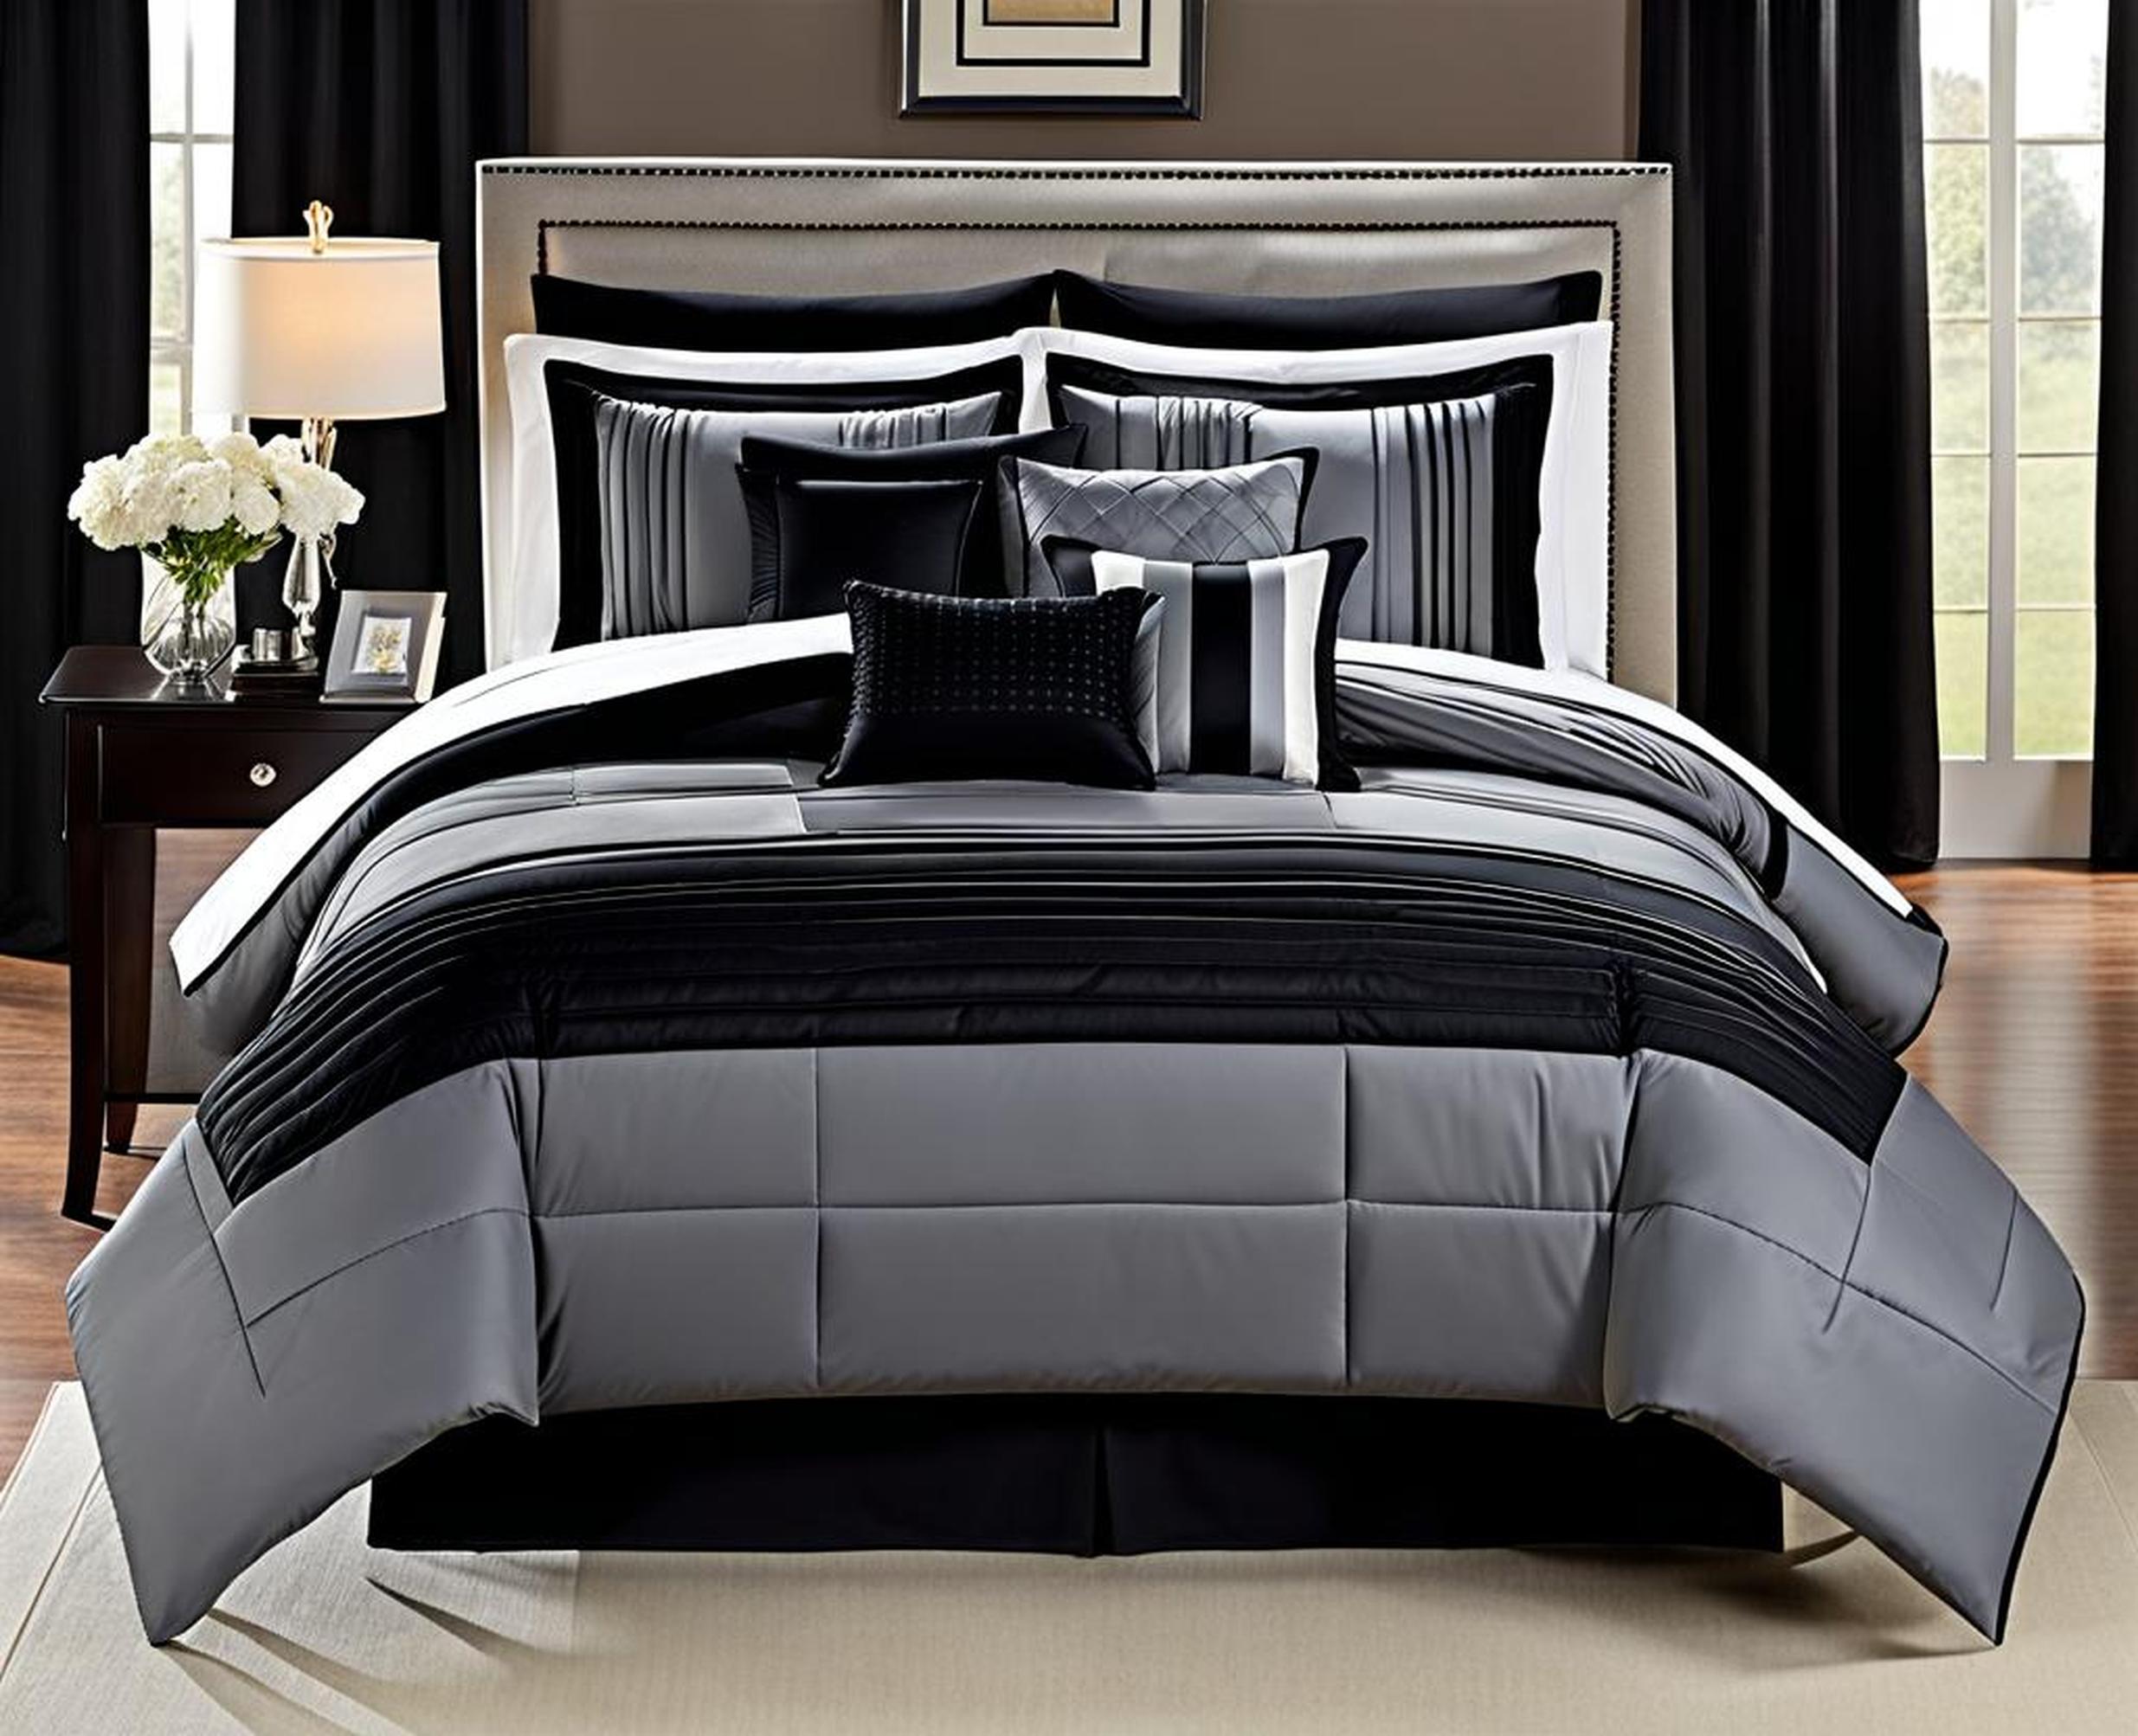 black and gray comforter sets king